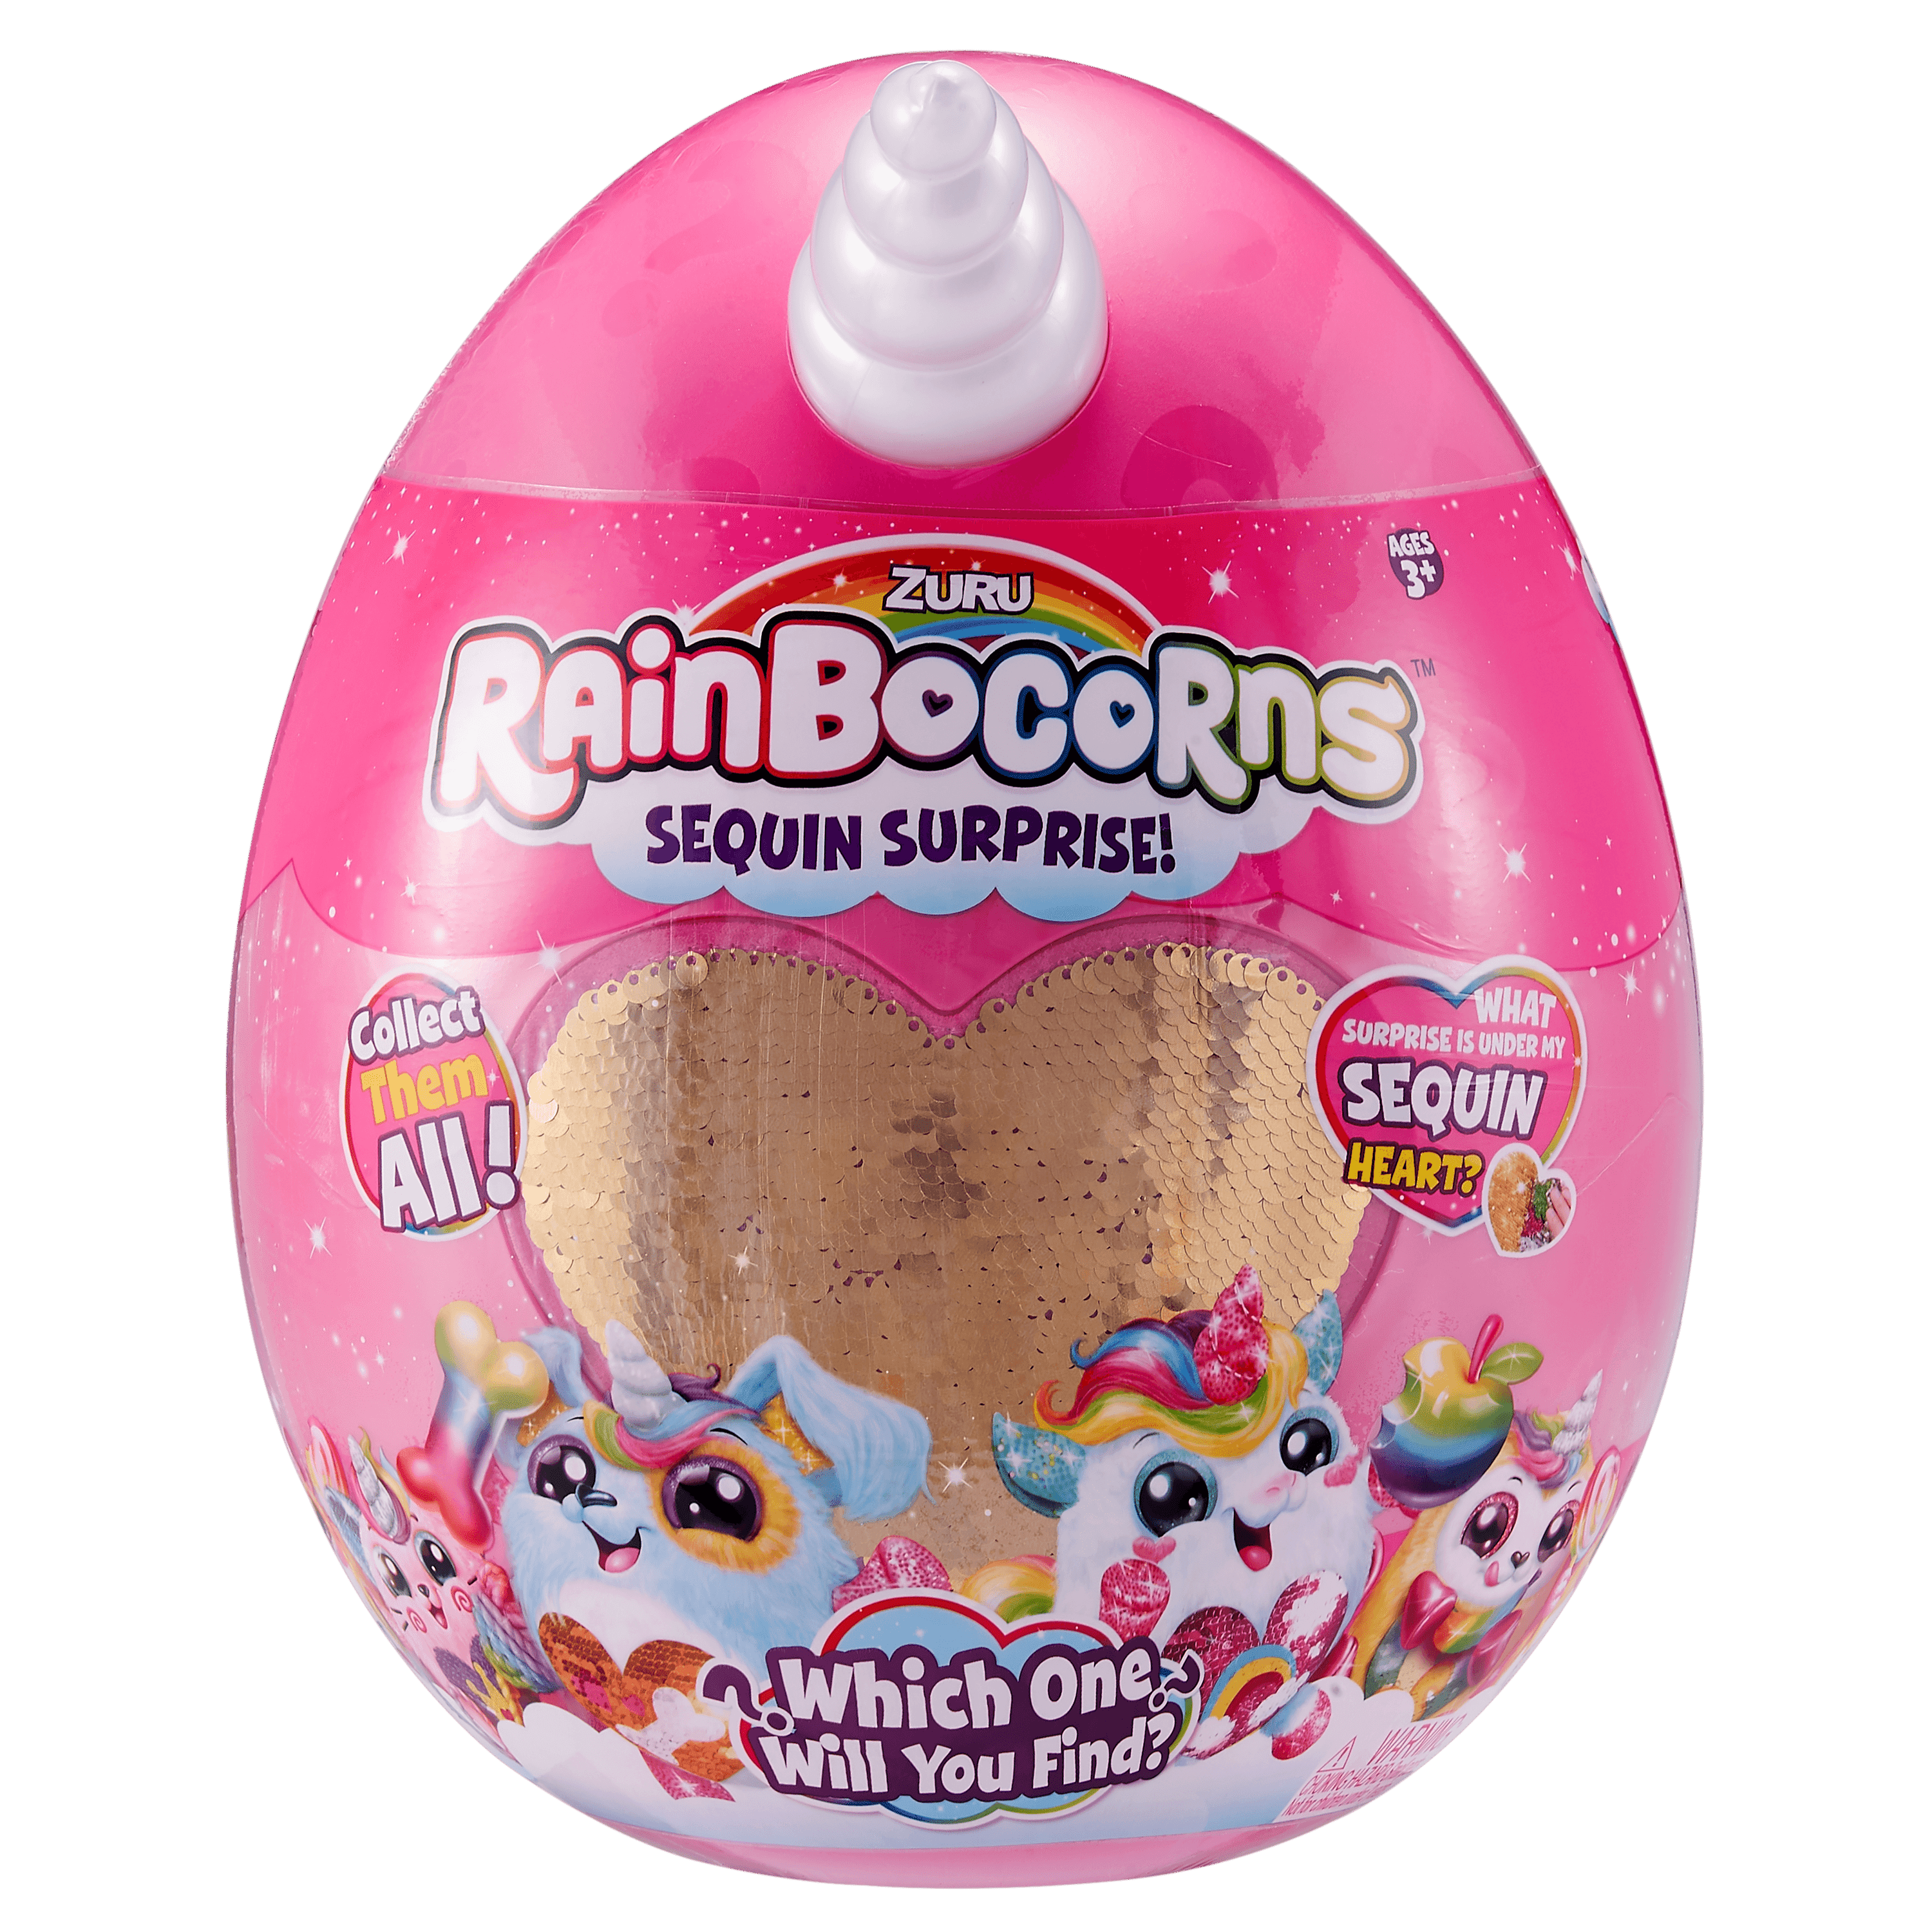 Rainbocorns Sequin Surprise Ultimate Mystery Egg Unicorn Pet Plush New Kids Toy 